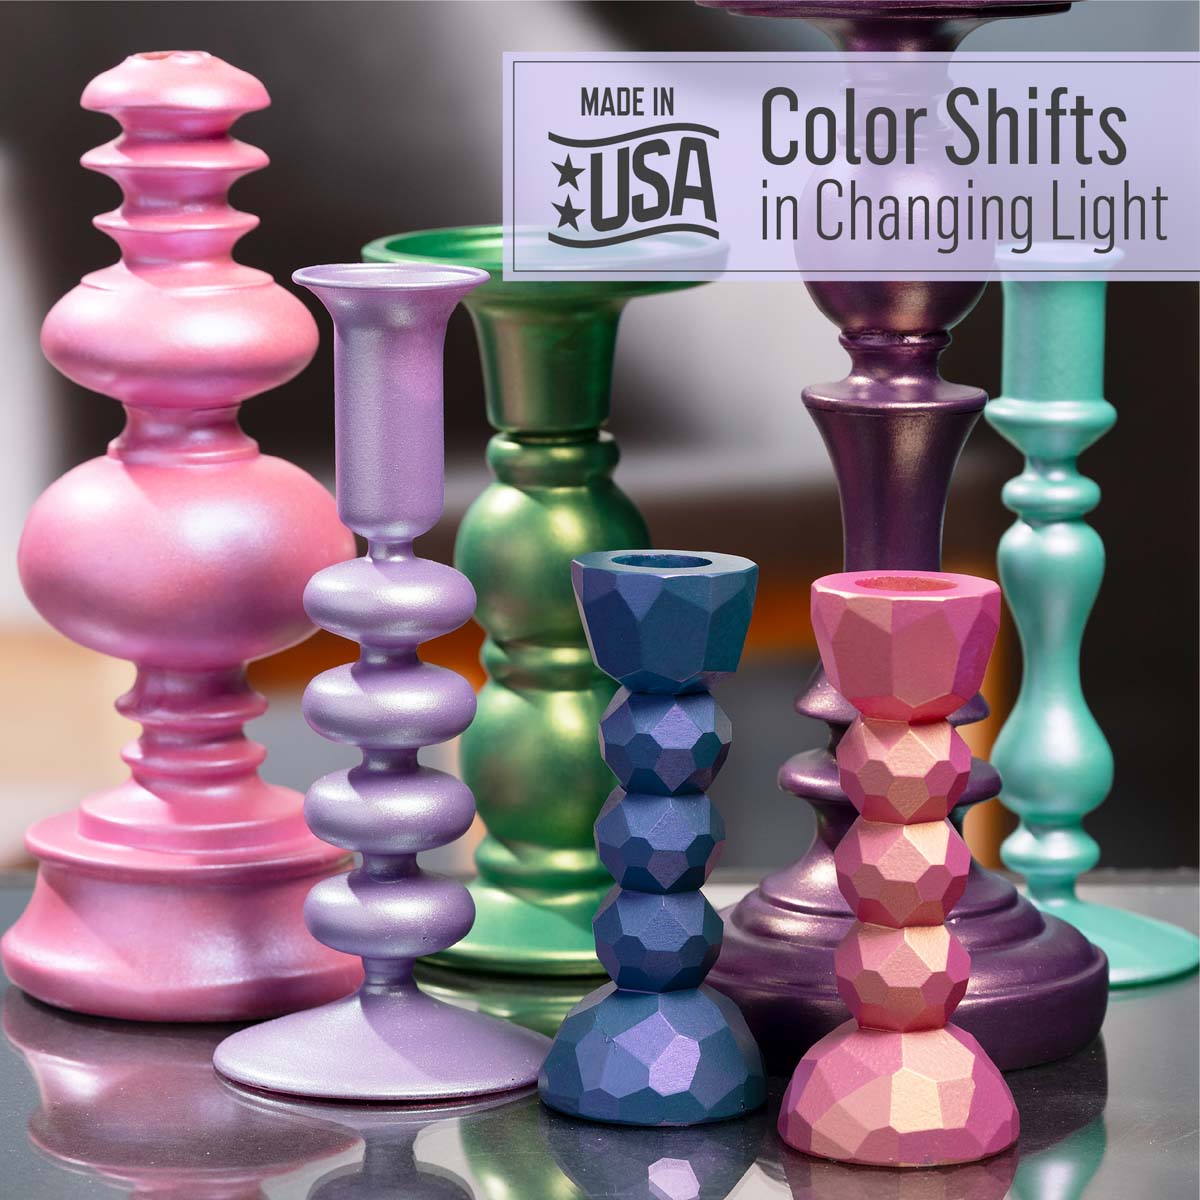 FolkArt ® Color Shift™ Acrylic Paint - Purple Flash, 4 oz. - 5192